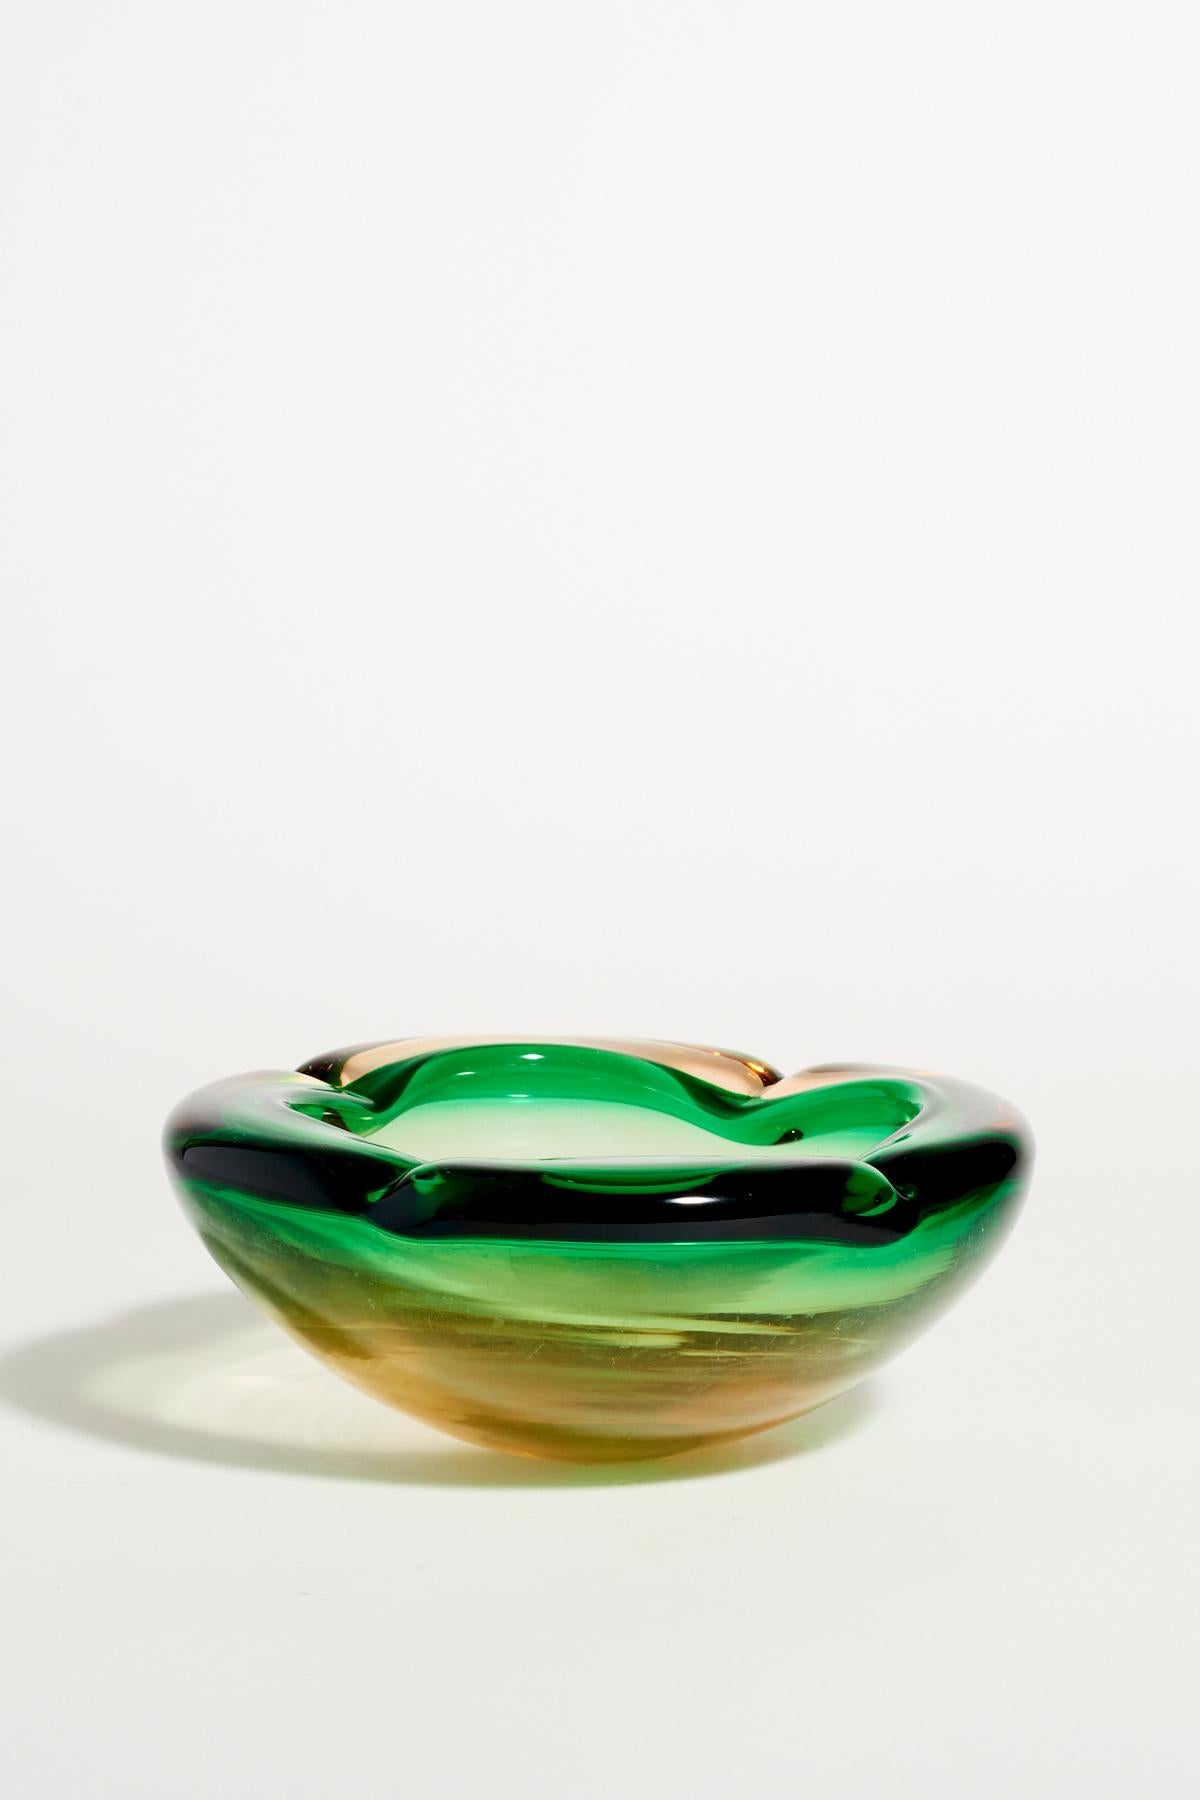 Mid-20th Century Italian Emerald Green/Amber Bowl